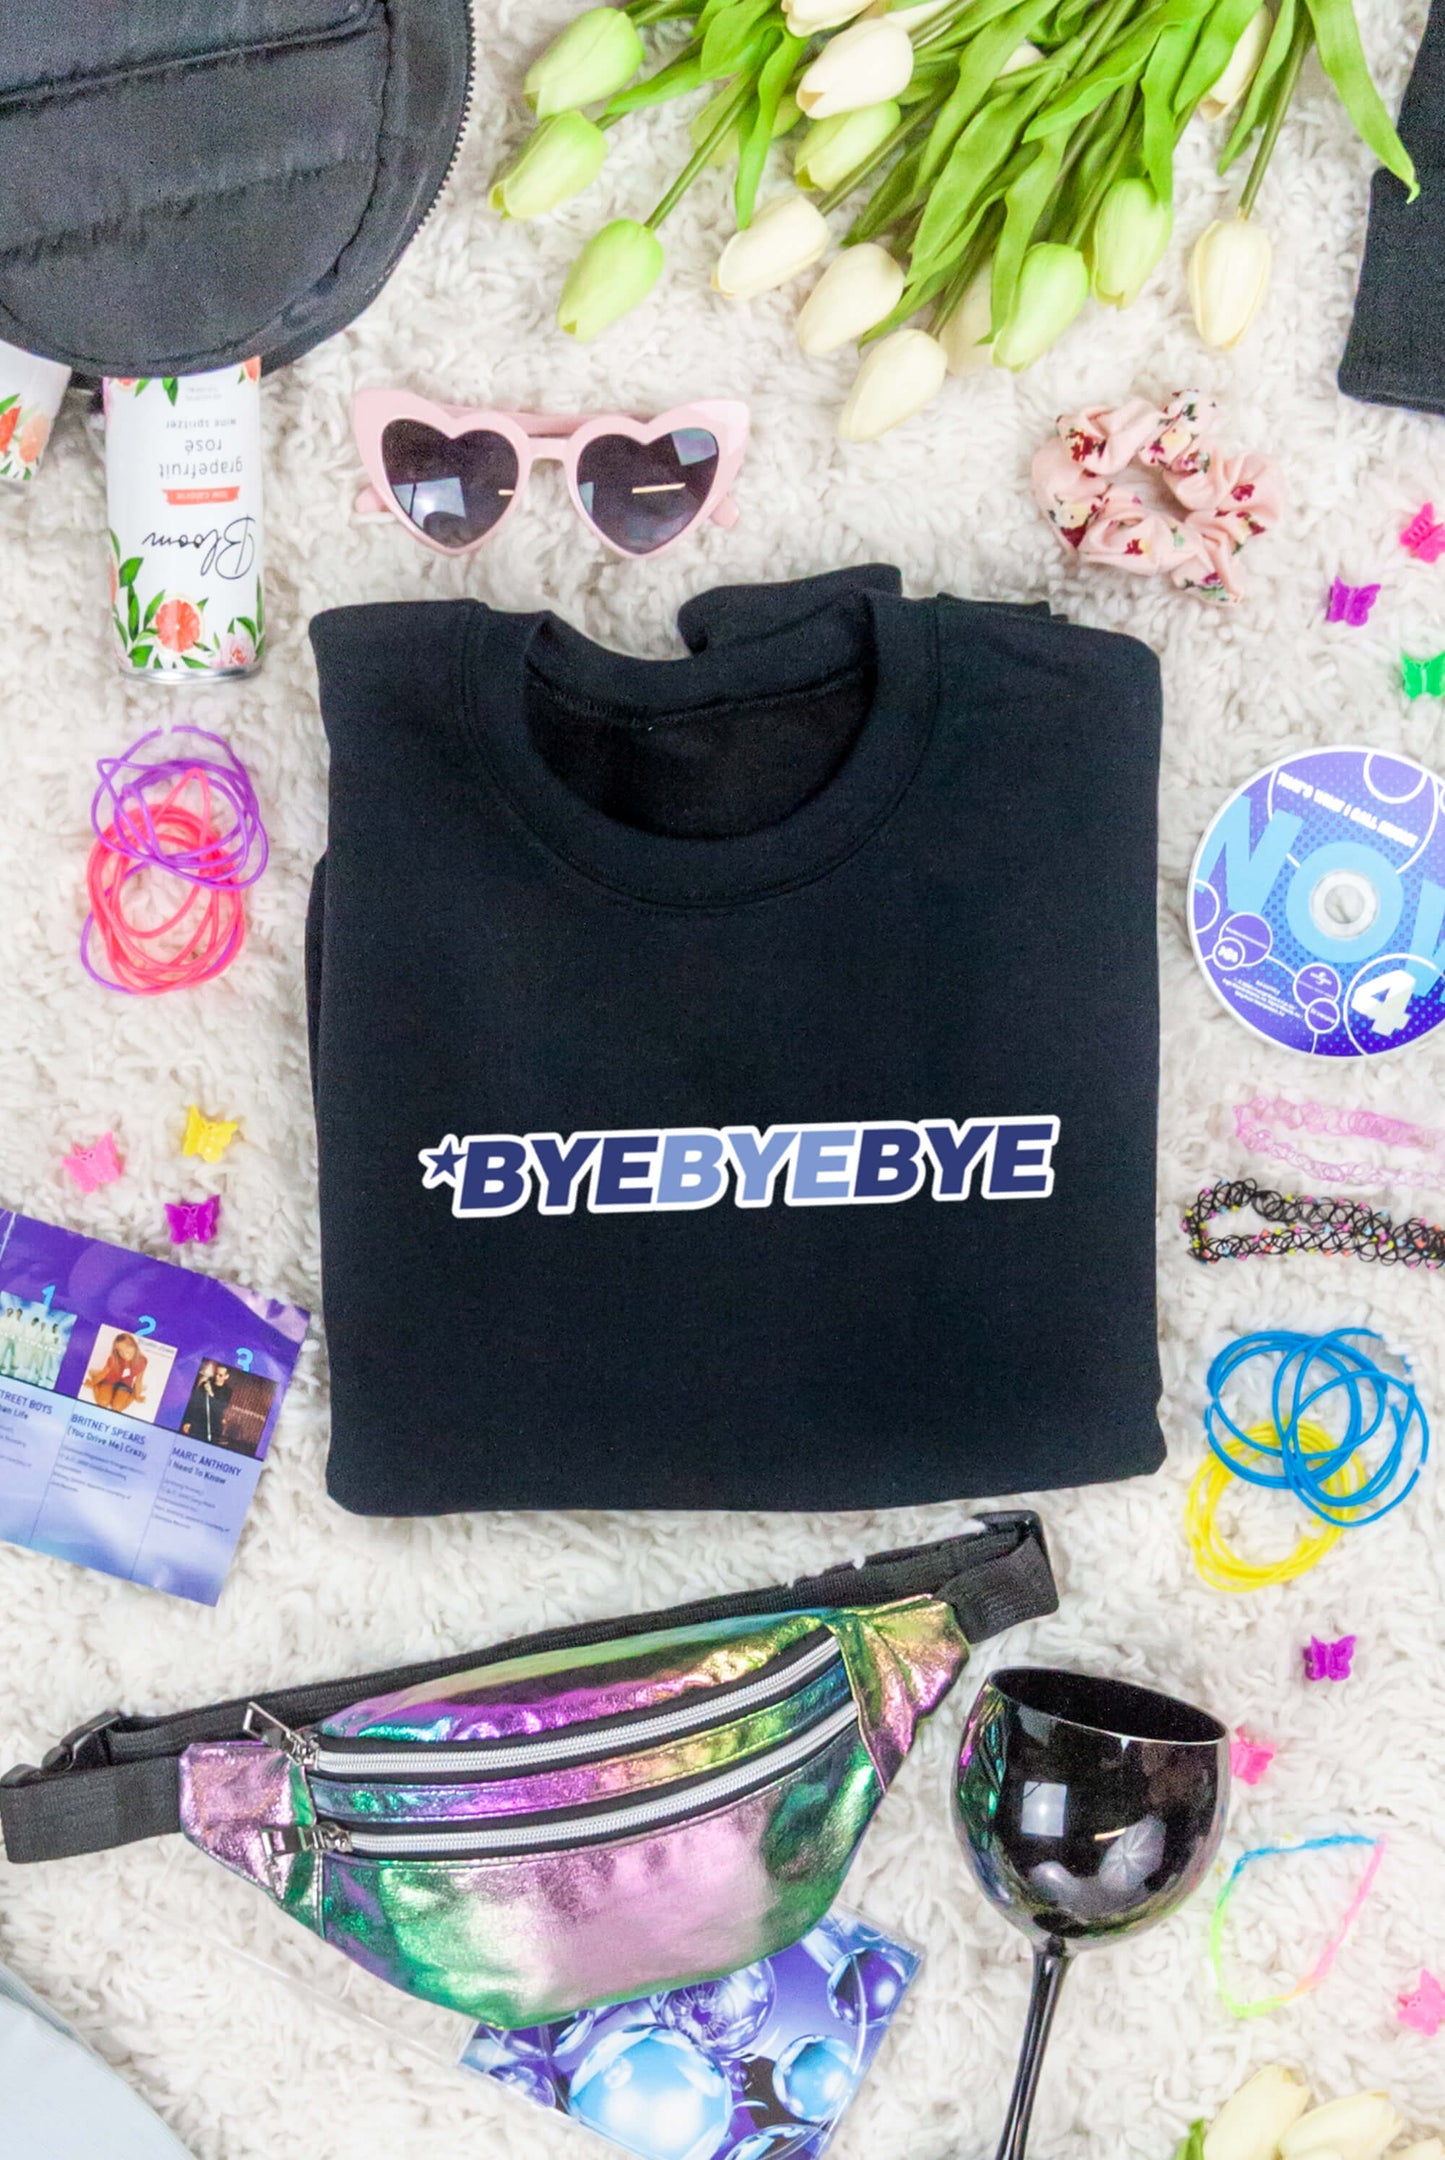 *NGAGED | ByeByeBye Sweatshirt - For Your Ultimate Boy Band Bachelorette Party!